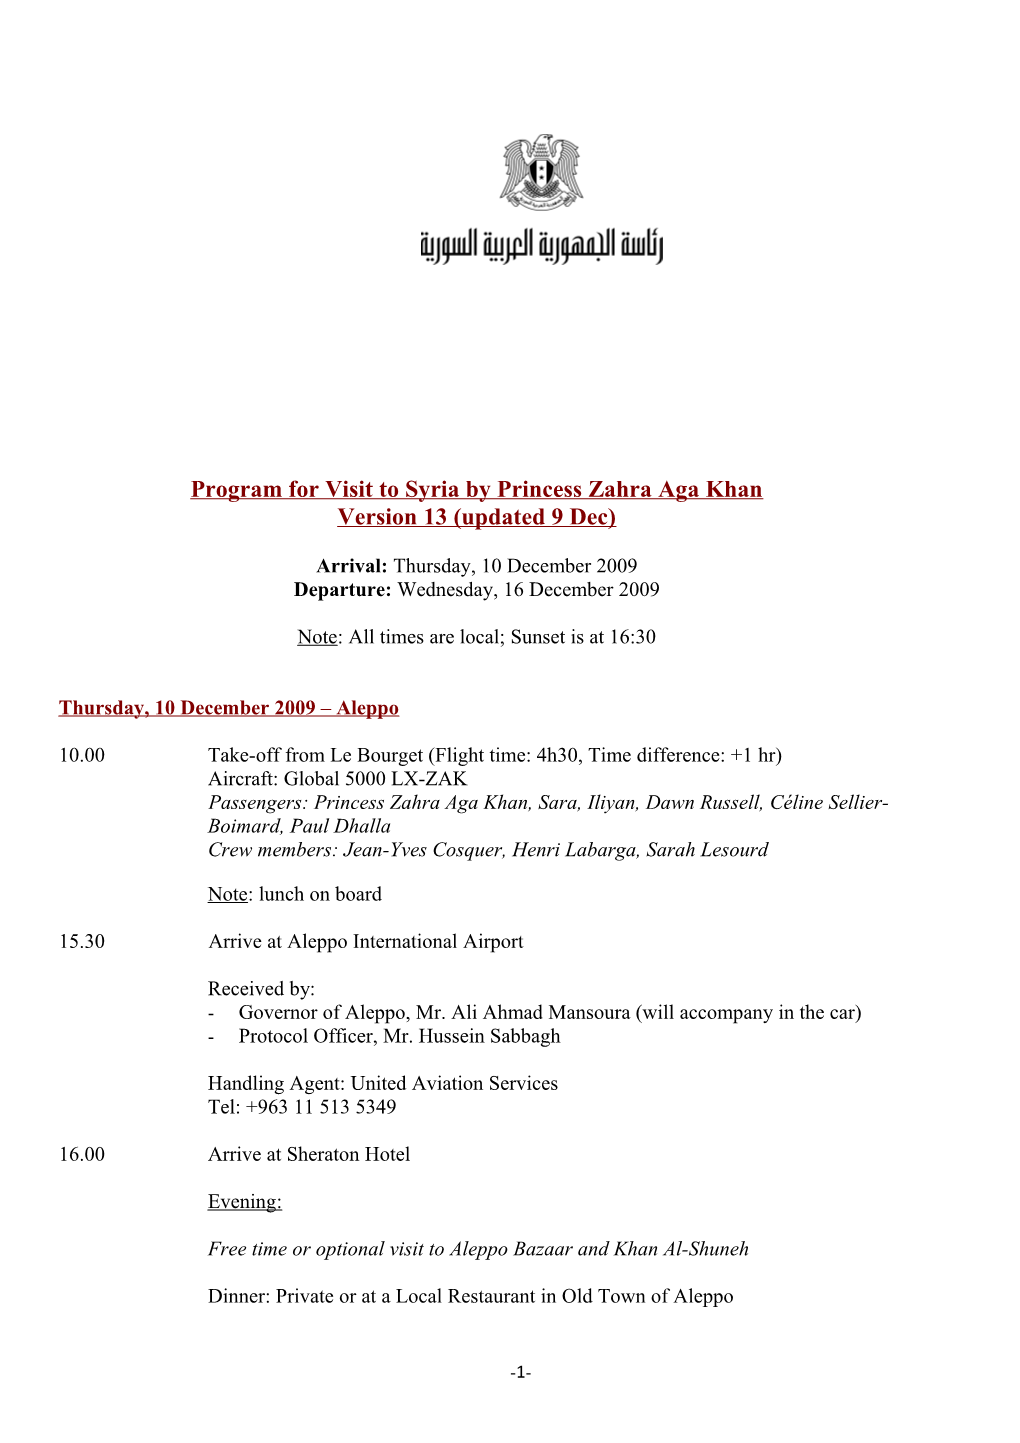 Program for Visit to Syria by Princess Zahra Aga Khan